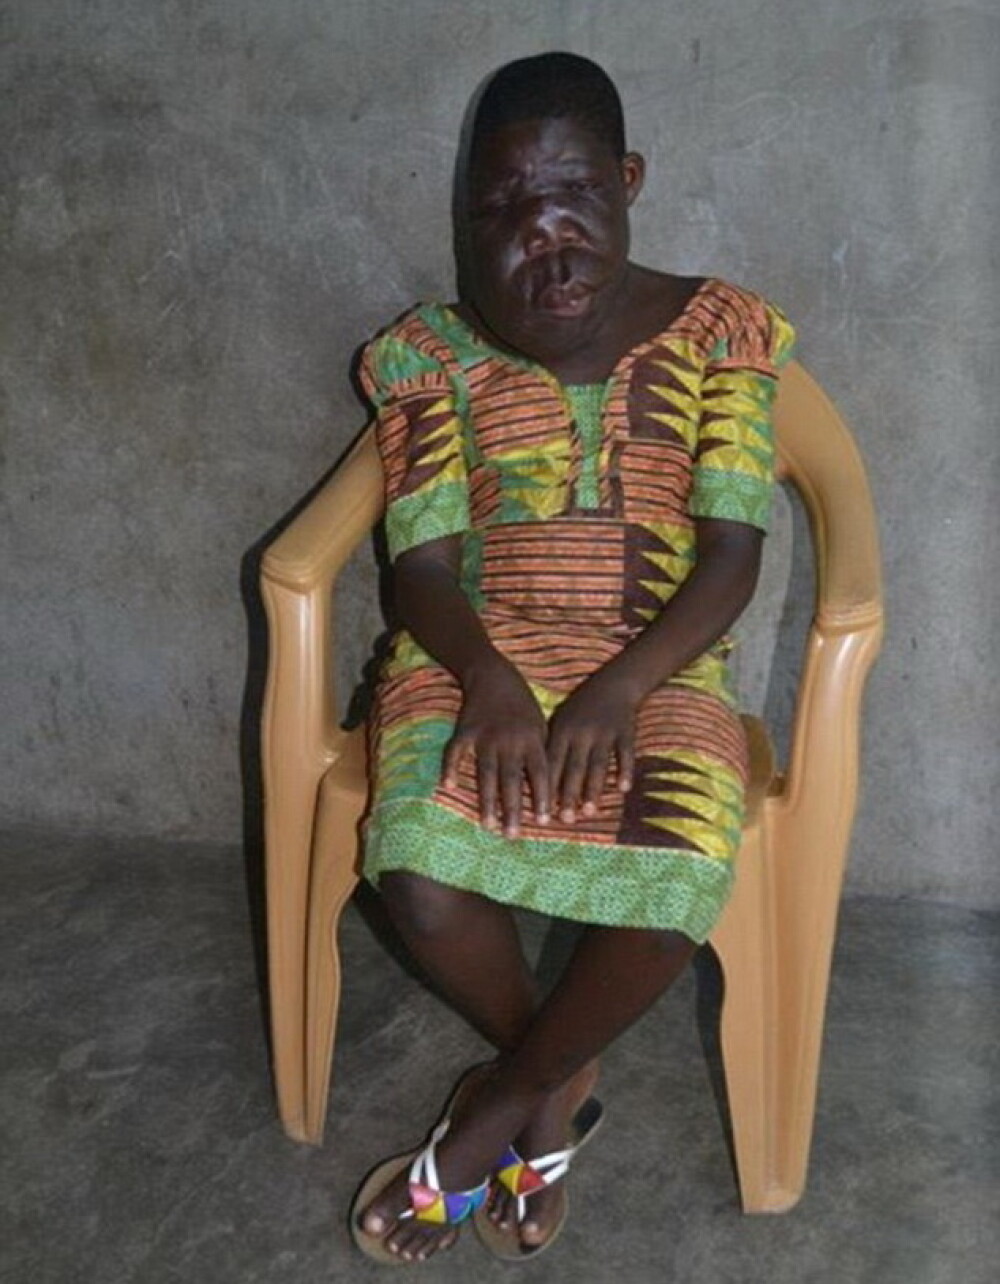 Fetita de 13 ani din Ghana cu o diformitate faciala extrema va fi operata. FOTO - Imaginea 5